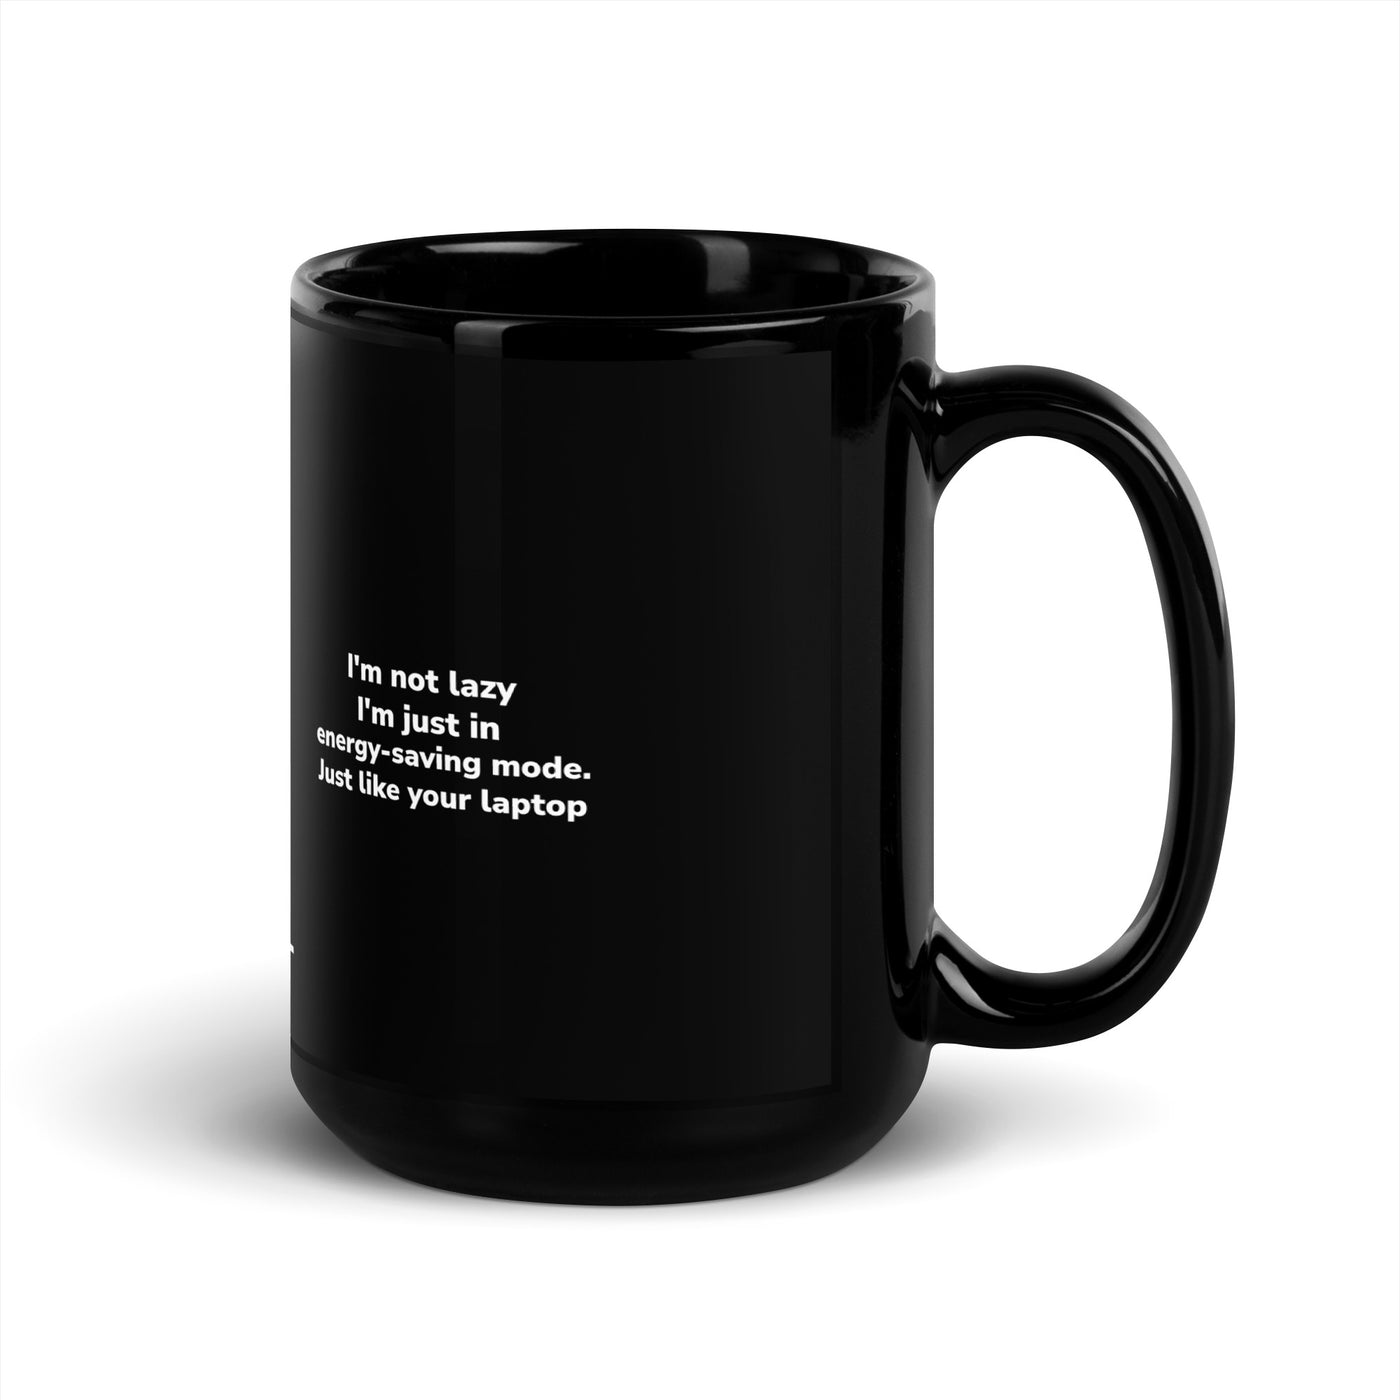 I am not lazy, I am in Energy-Saving Mode, Just like your laptop - Black Glossy Mug